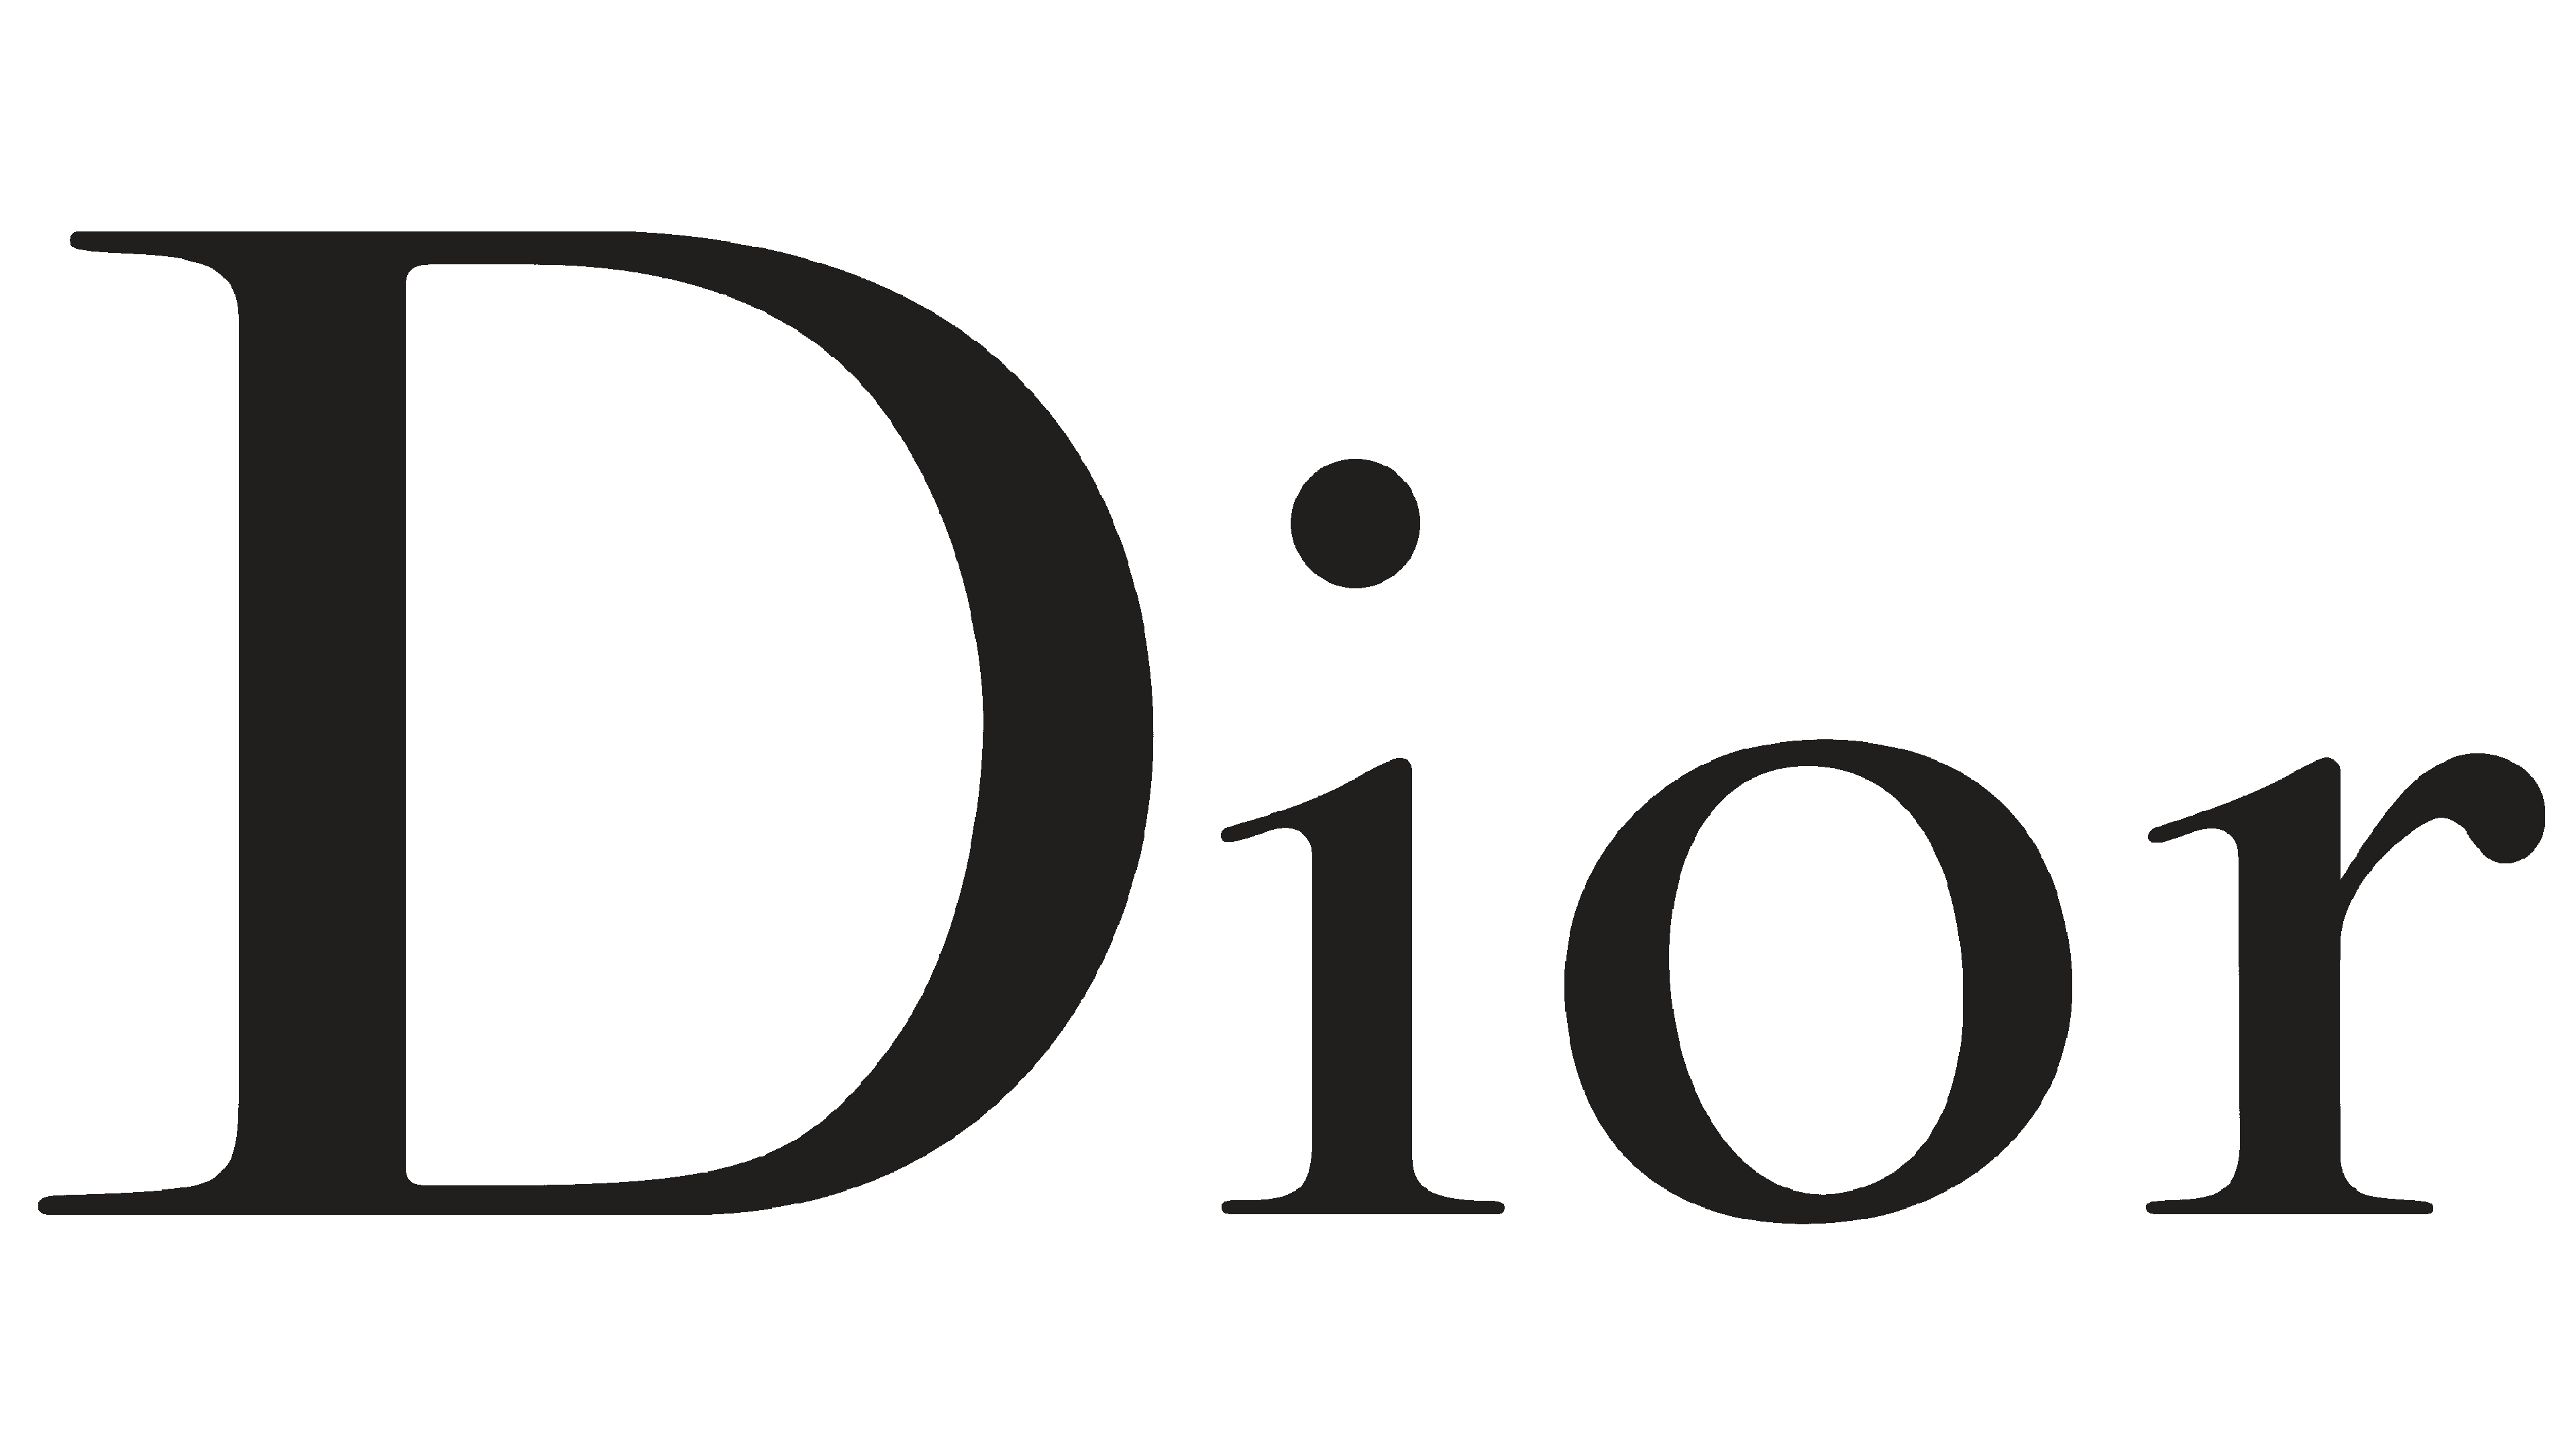 Dior logo HD wallpapers  Pxfuel